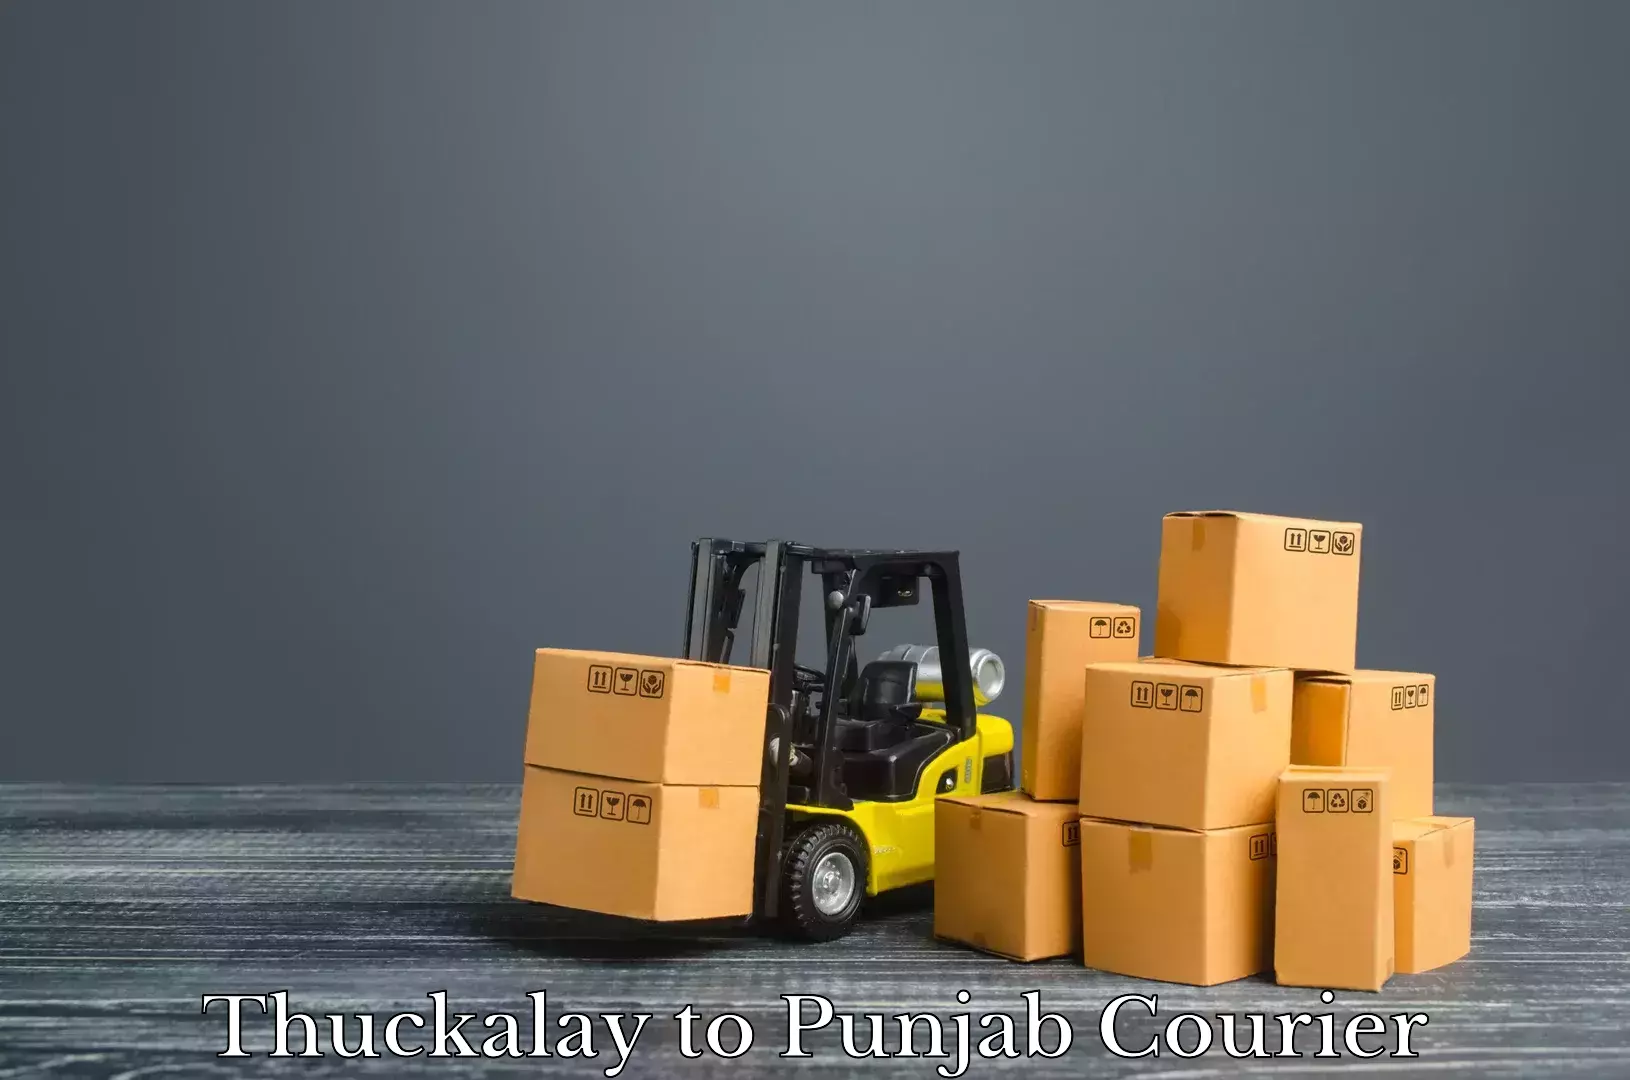 Luggage shipment strategy Thuckalay to Punjab